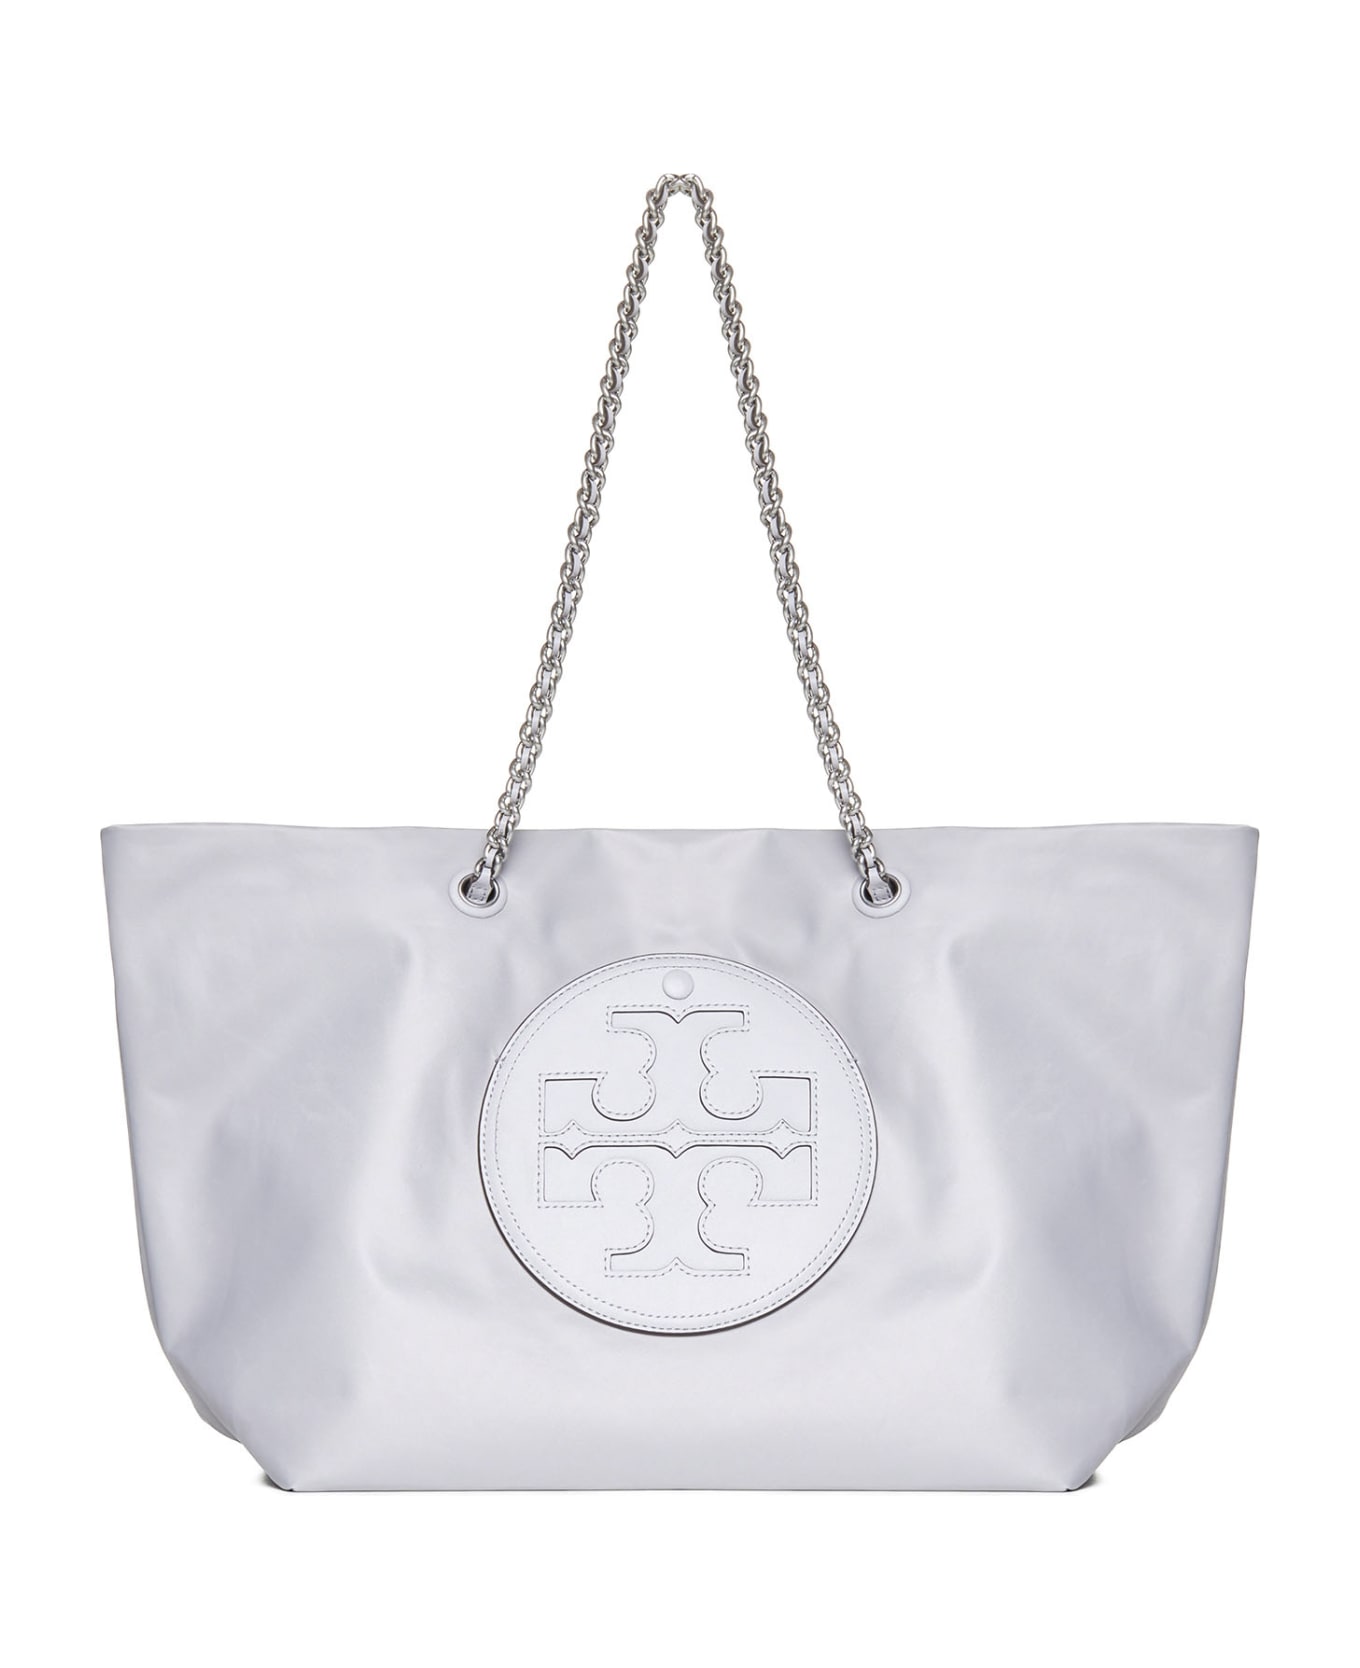 Tory Burch Ella Chain Shopping Bag - Grey